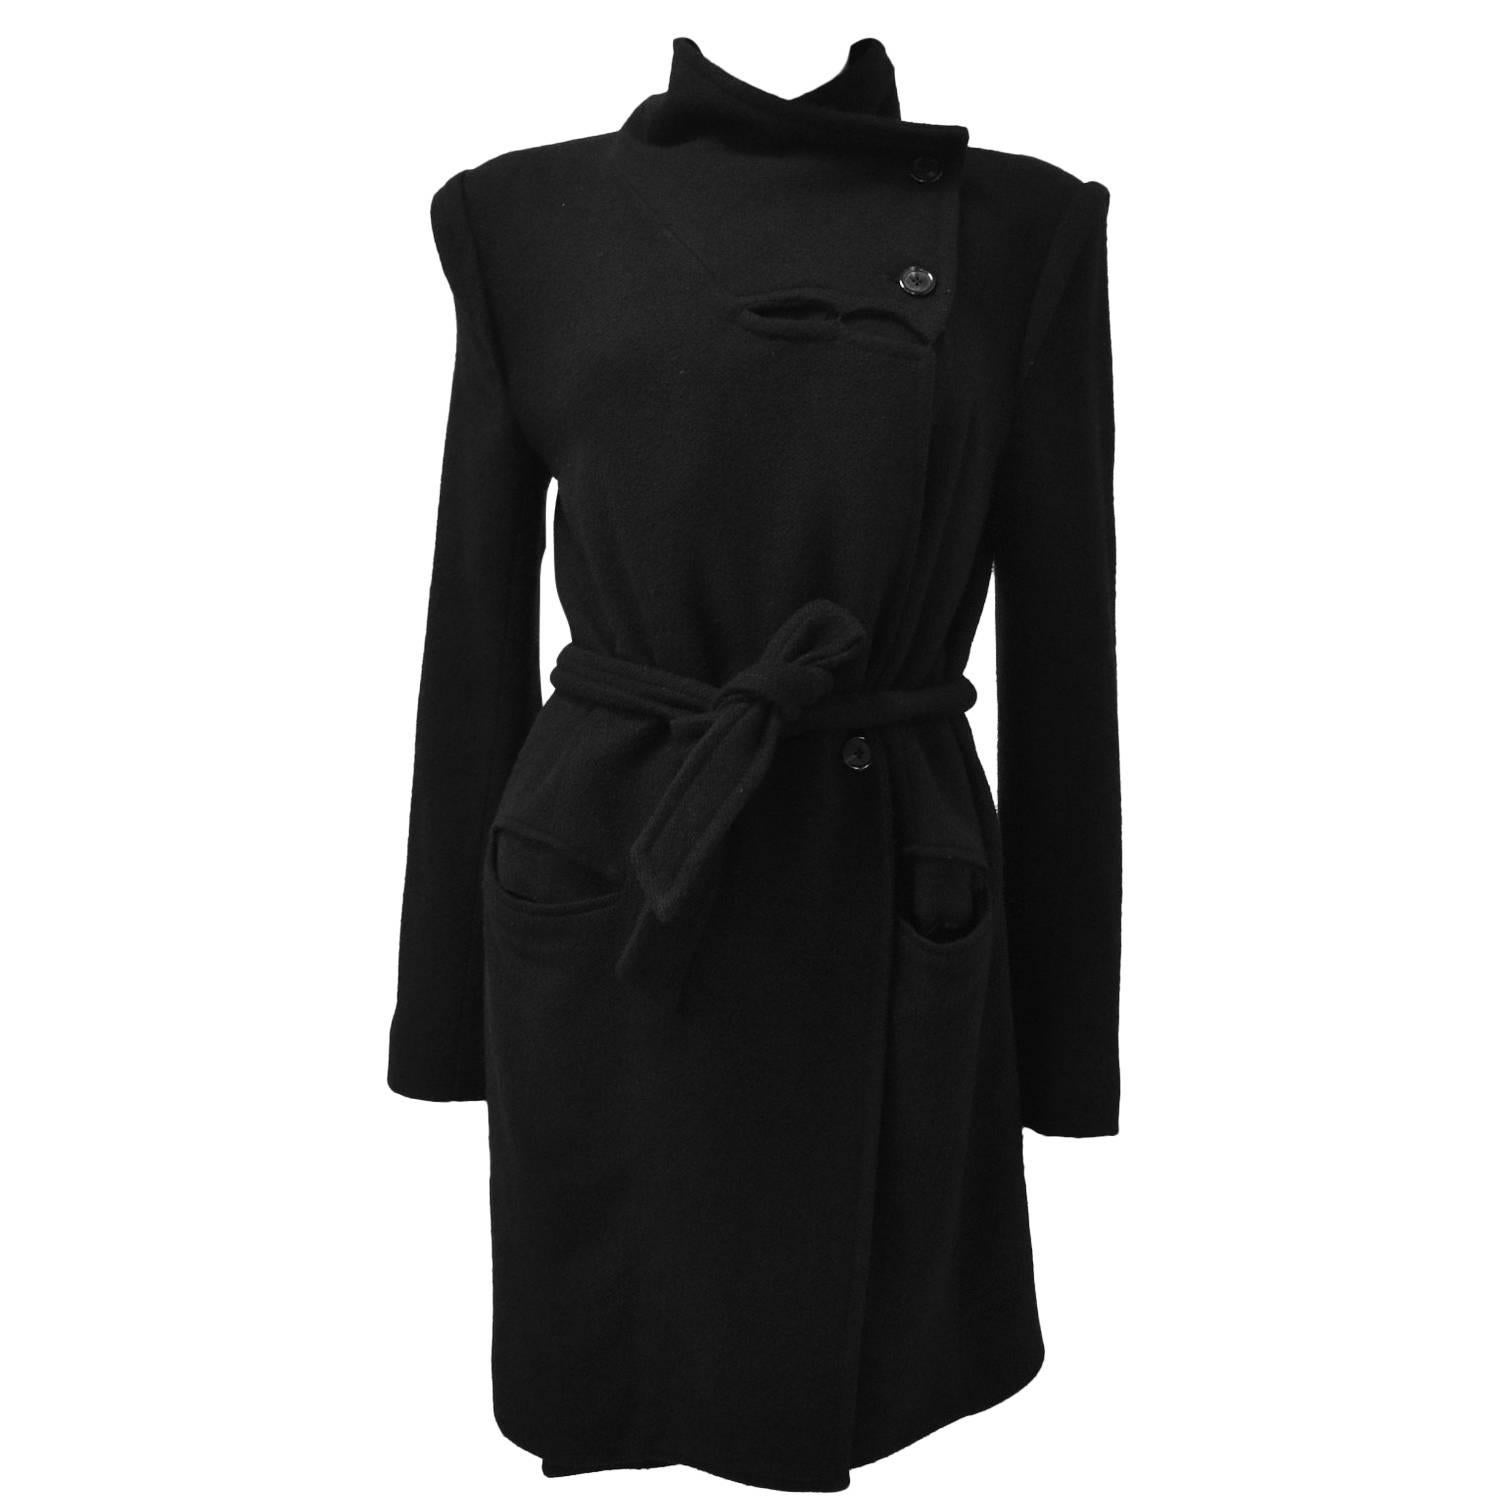 Ann Demeulemeester Black Asymmetric Coat with Collar Details and Tie Waist 